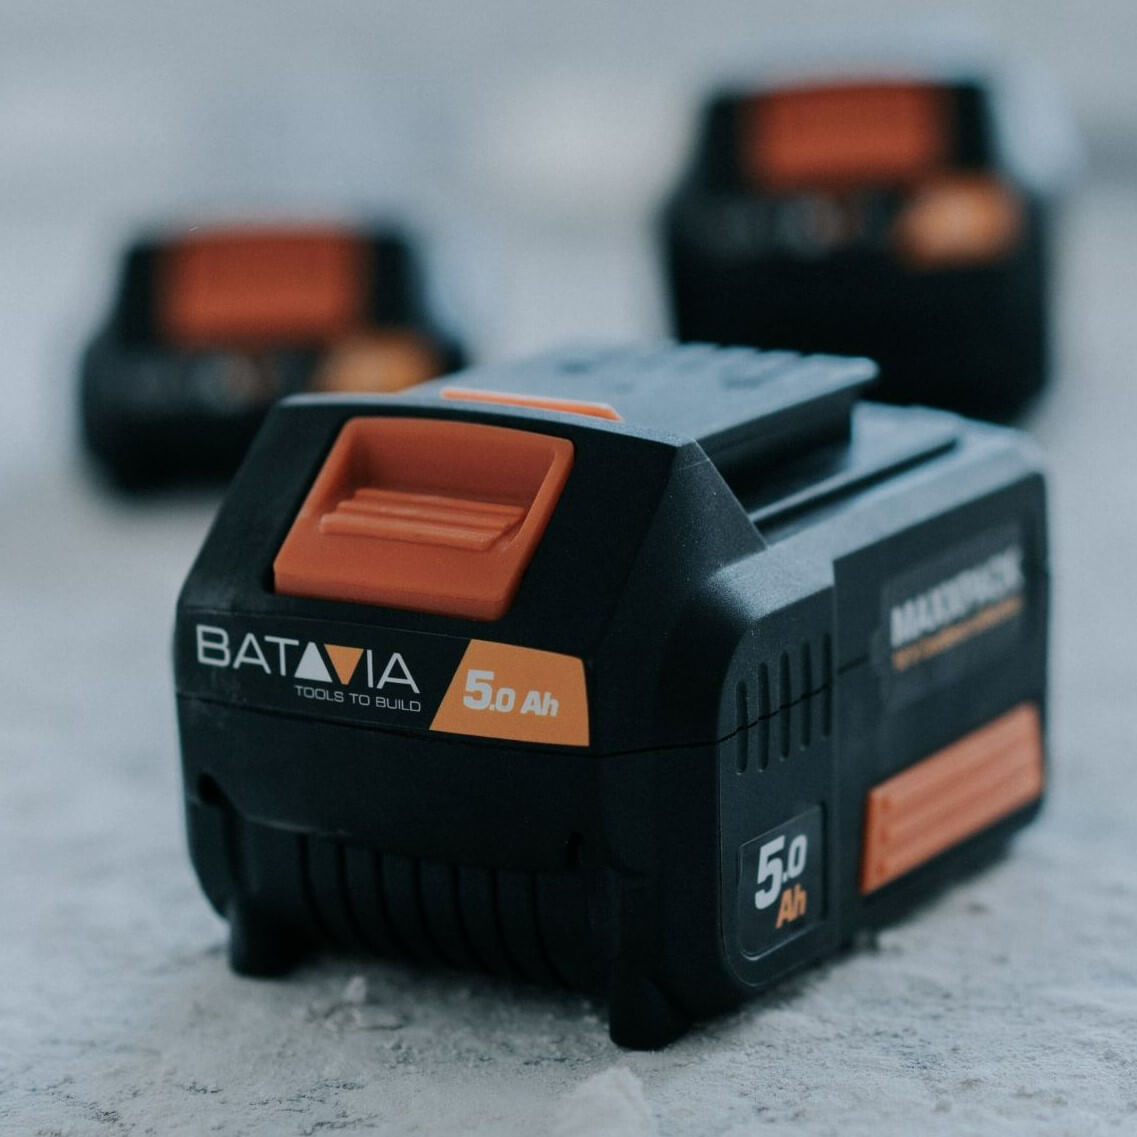 5.0Ah Battery Powertools | Maxxpack collection | Batavia